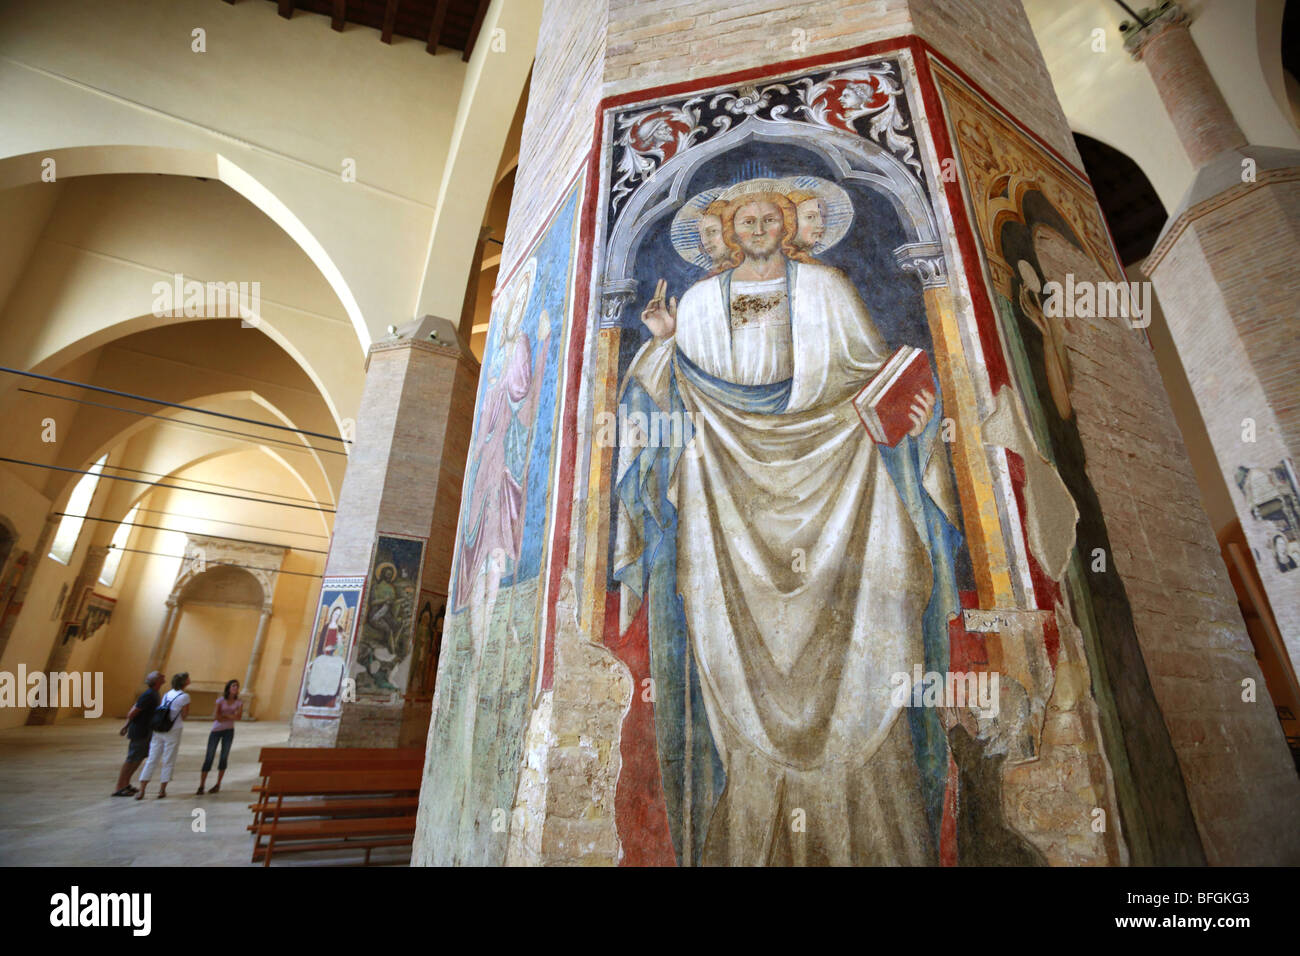 Frescoes inside the 13th century Cathedral Santa Maria Assunta in Atri, Abruzzo, Italy. Stock Photo